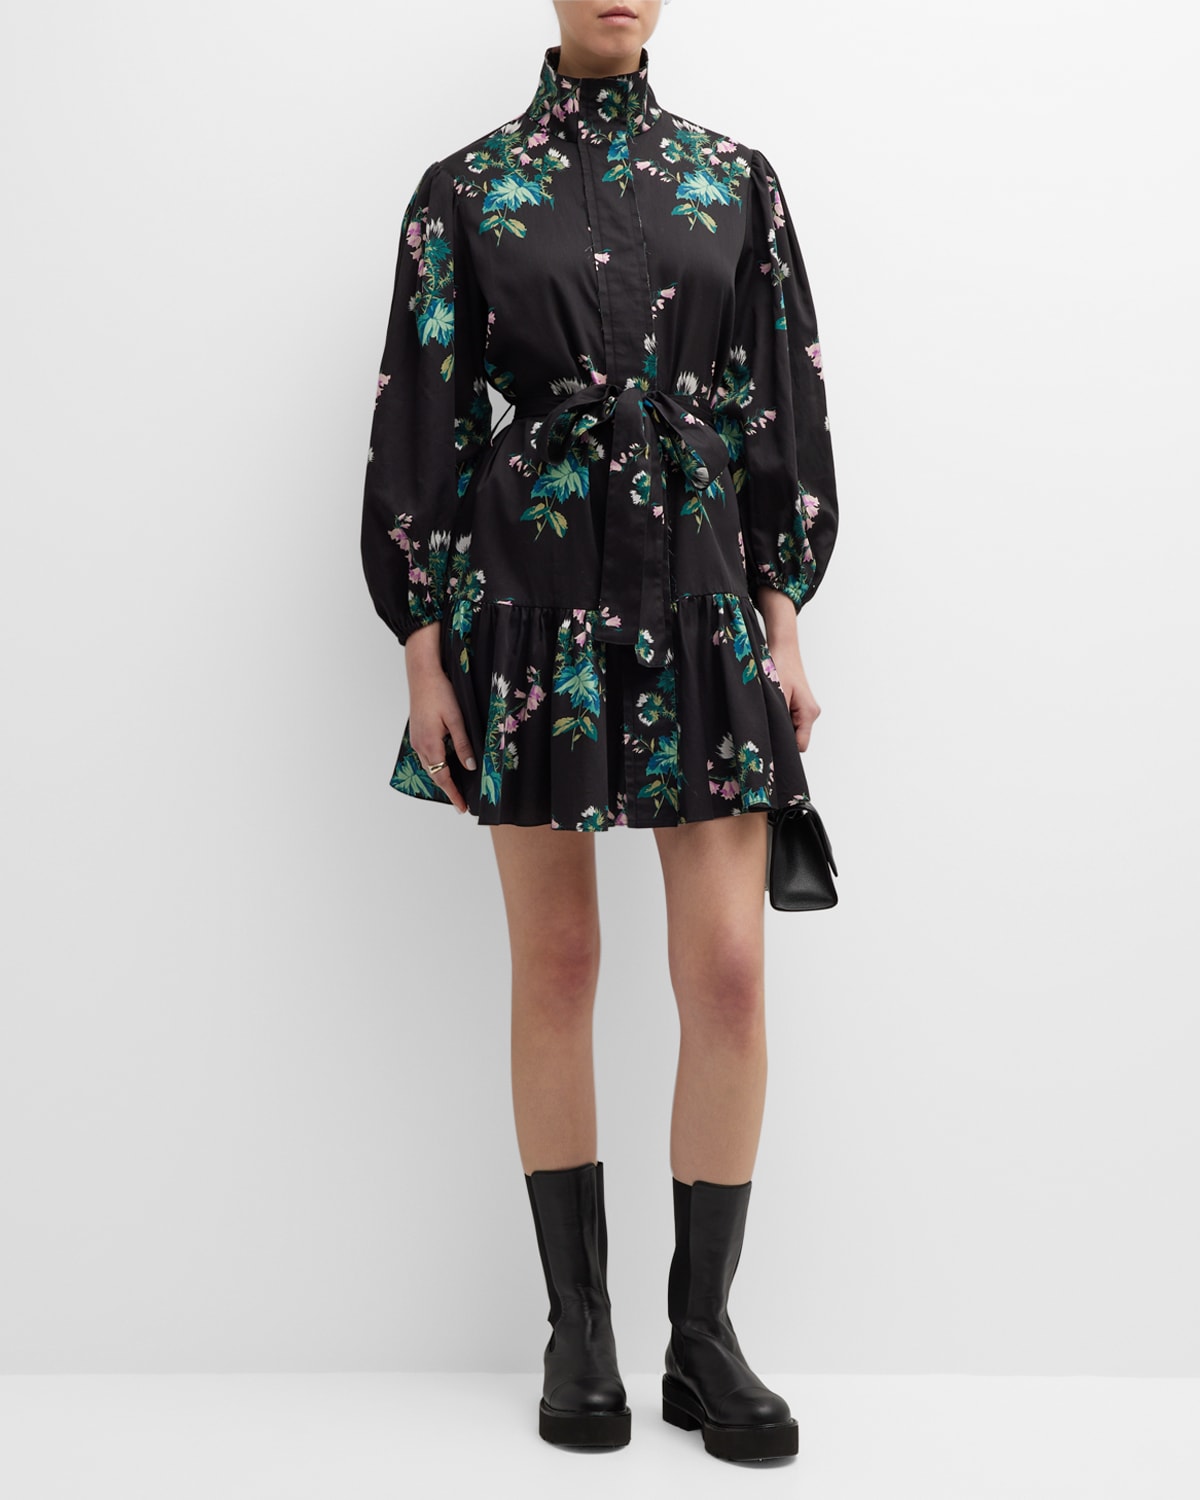 ARIAS New York Floral-Print Blouson-Sleeve Flounce Mini Dress